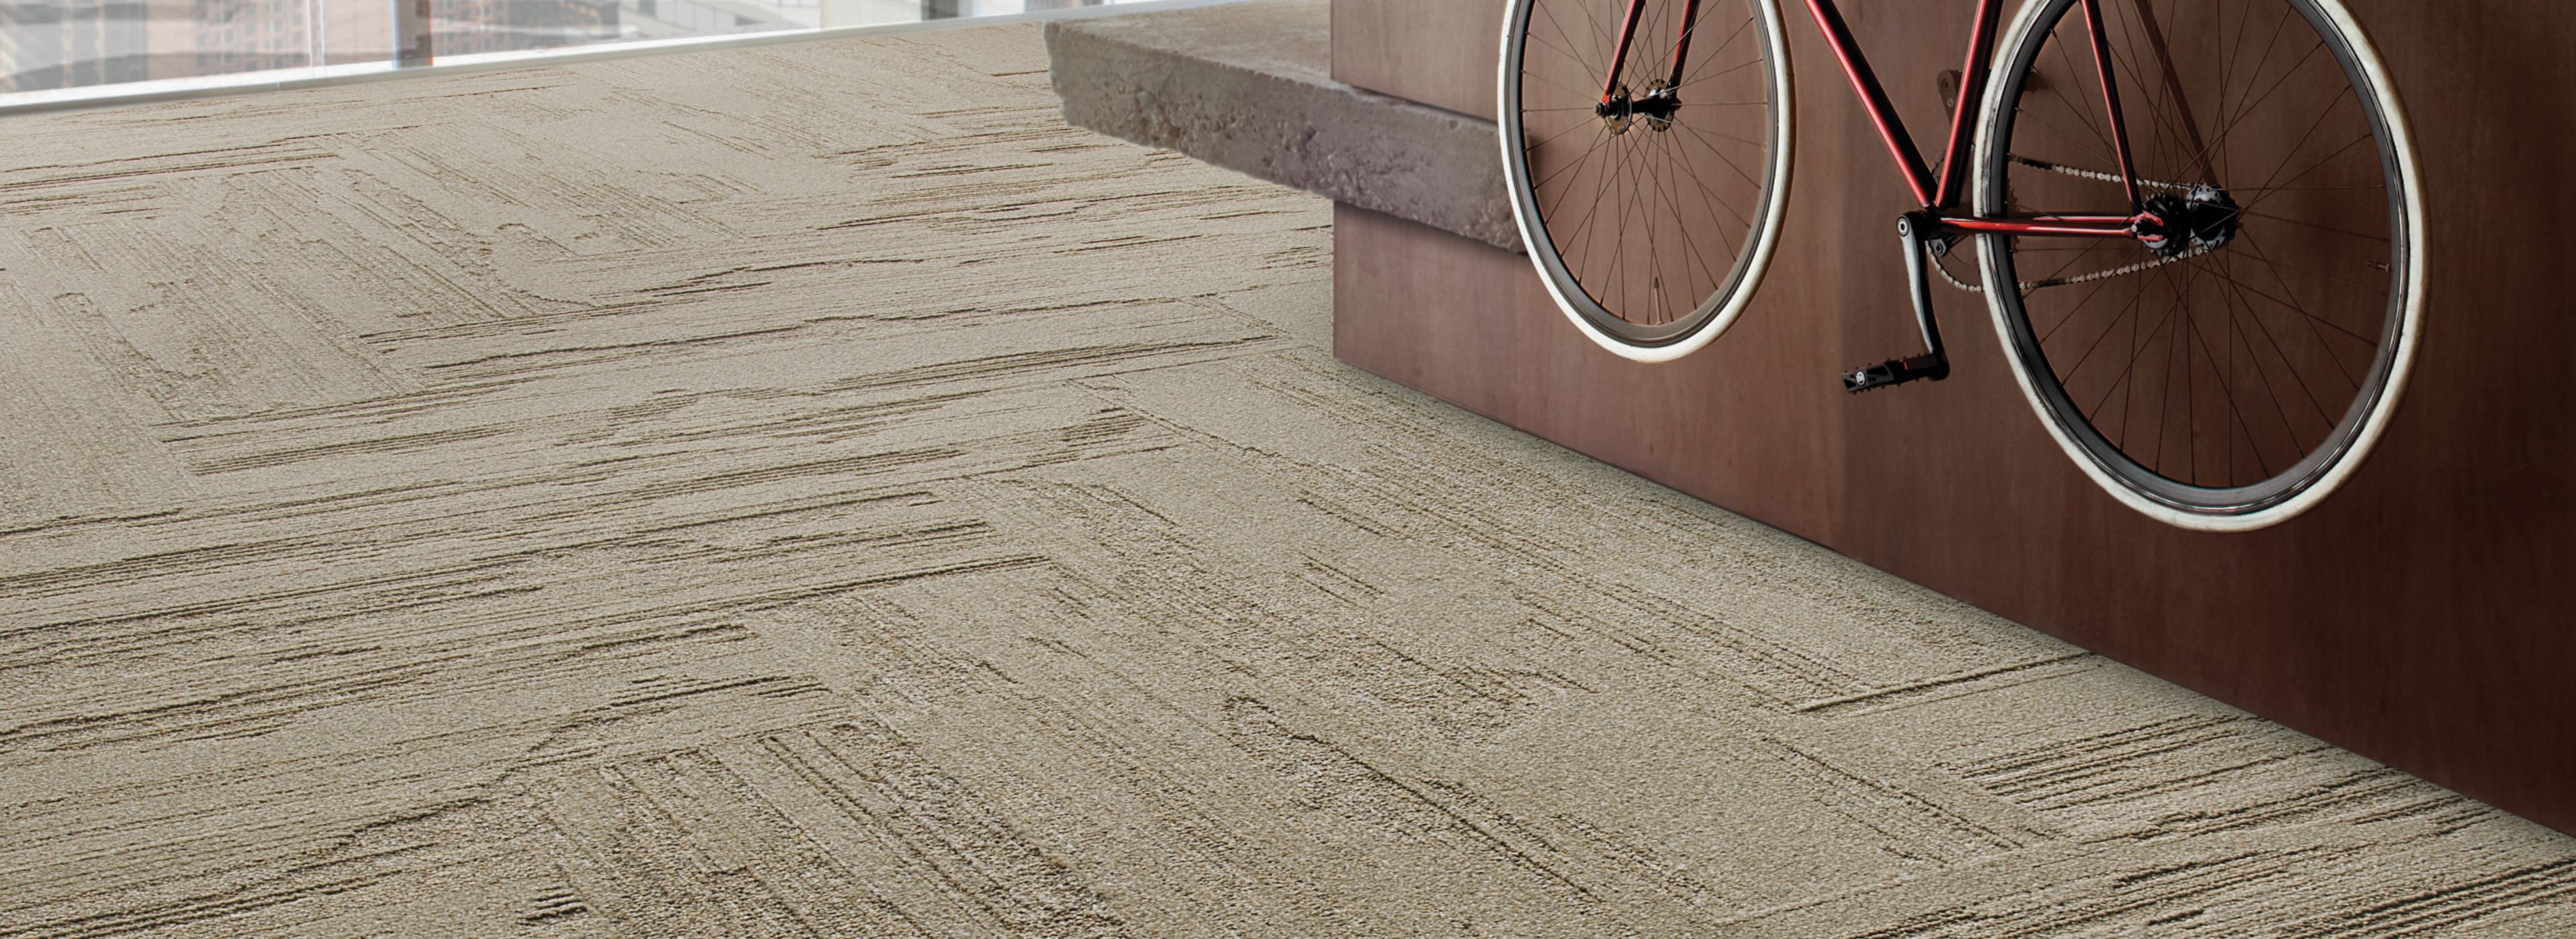 Interface UR501 plank carpet tile in office common area with bike  Bildnummer 1